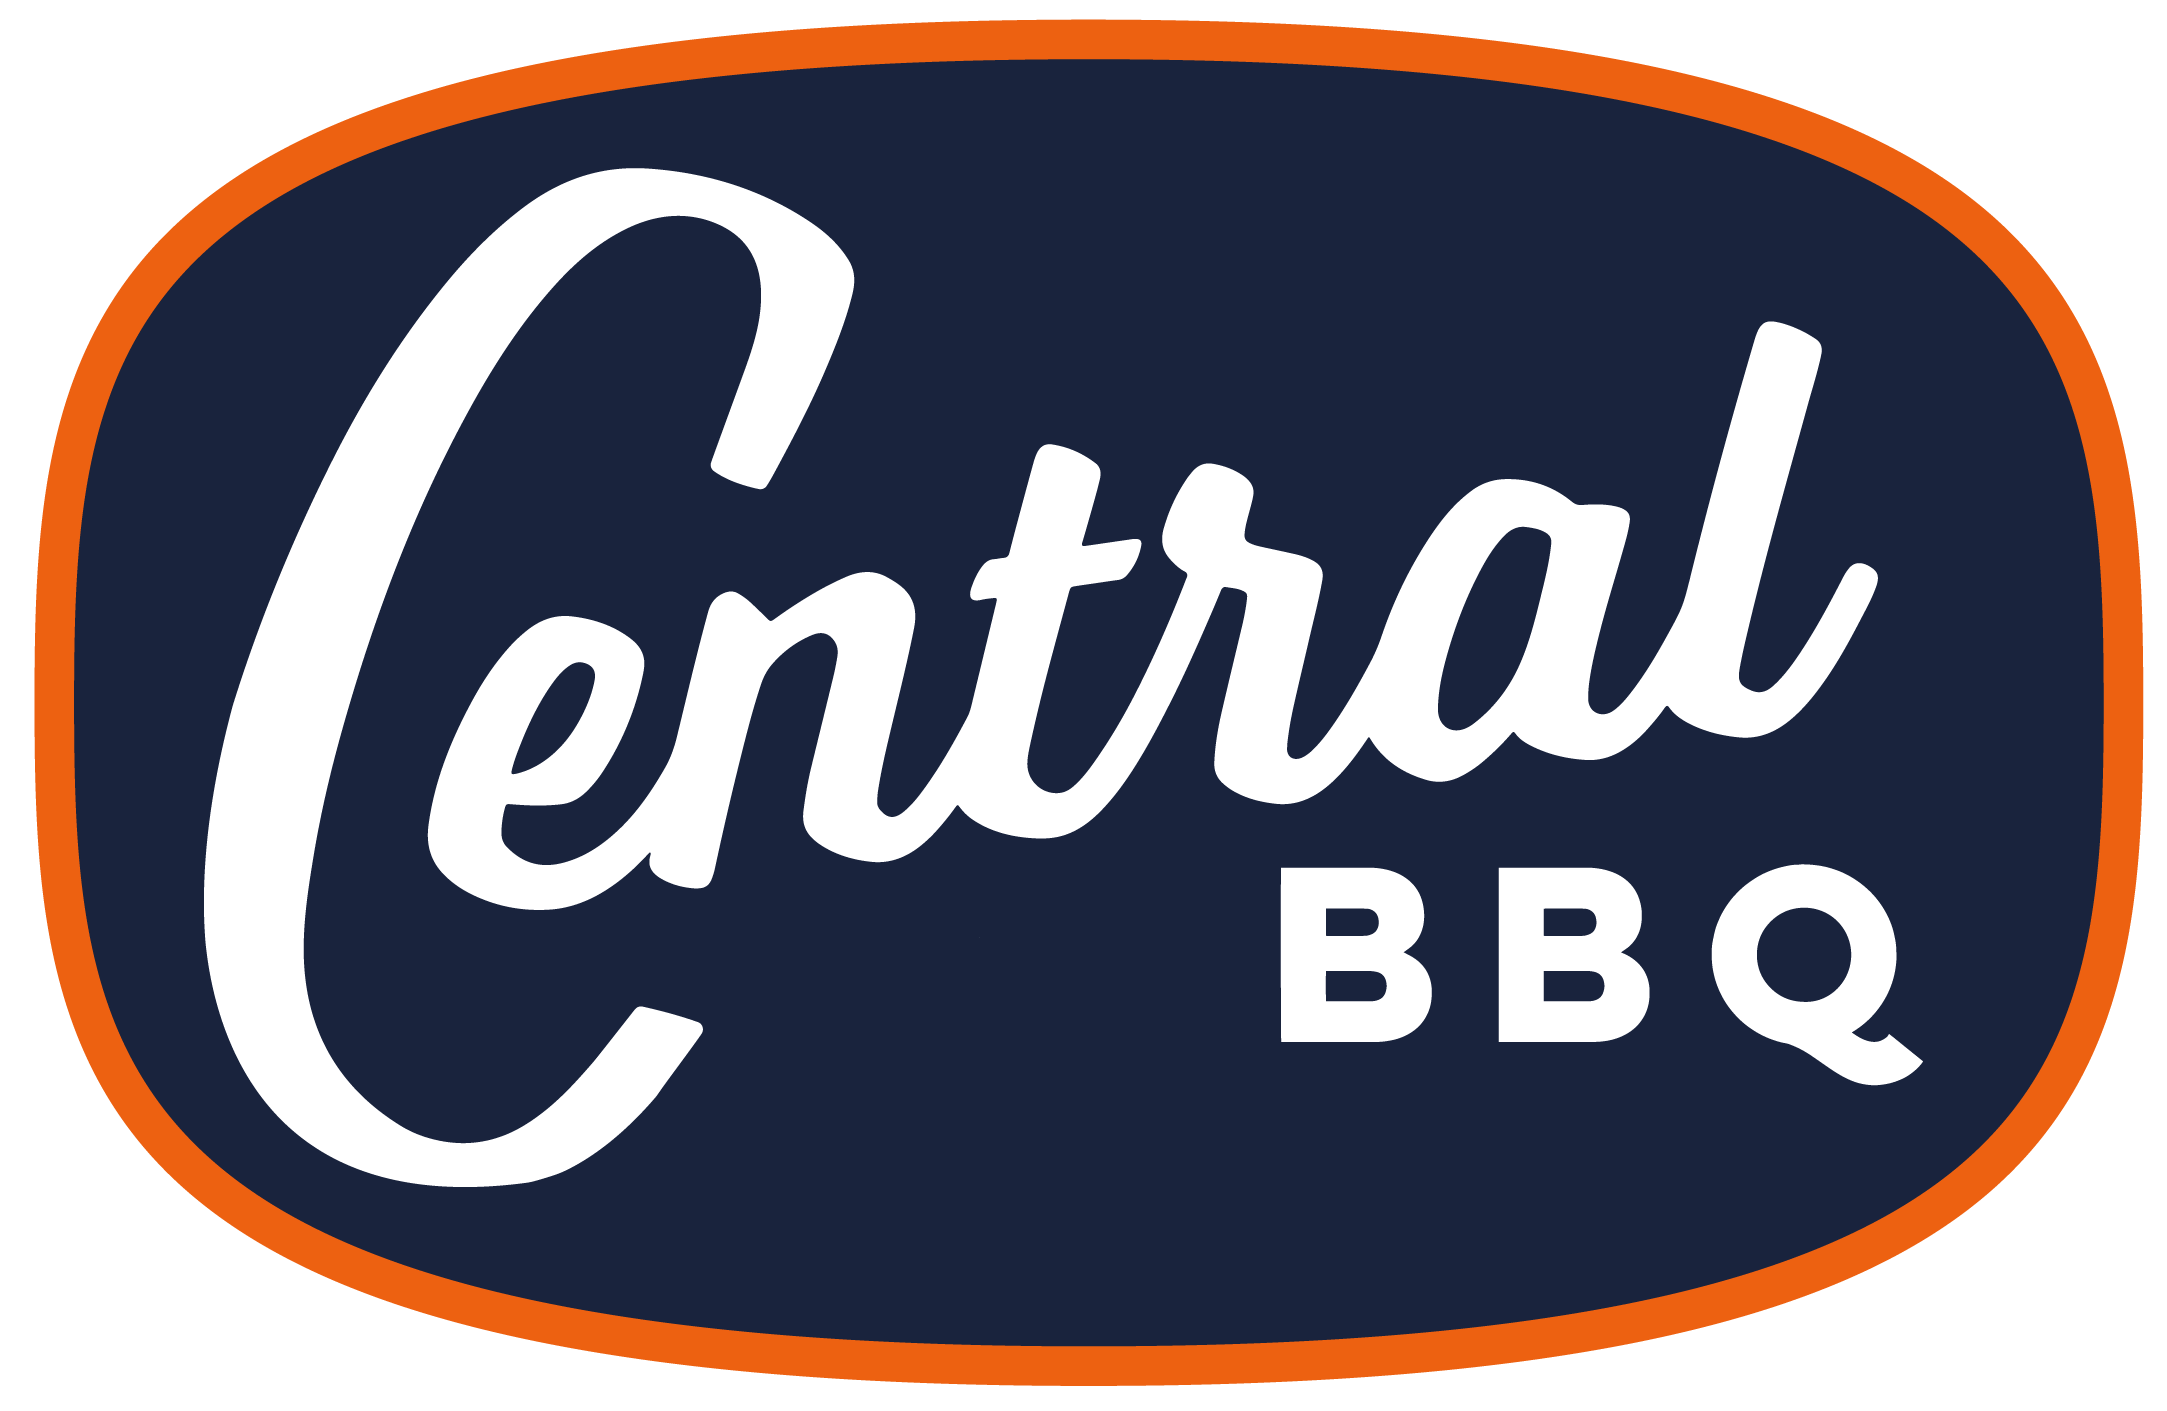 2018 Central BBQ Logo Blue